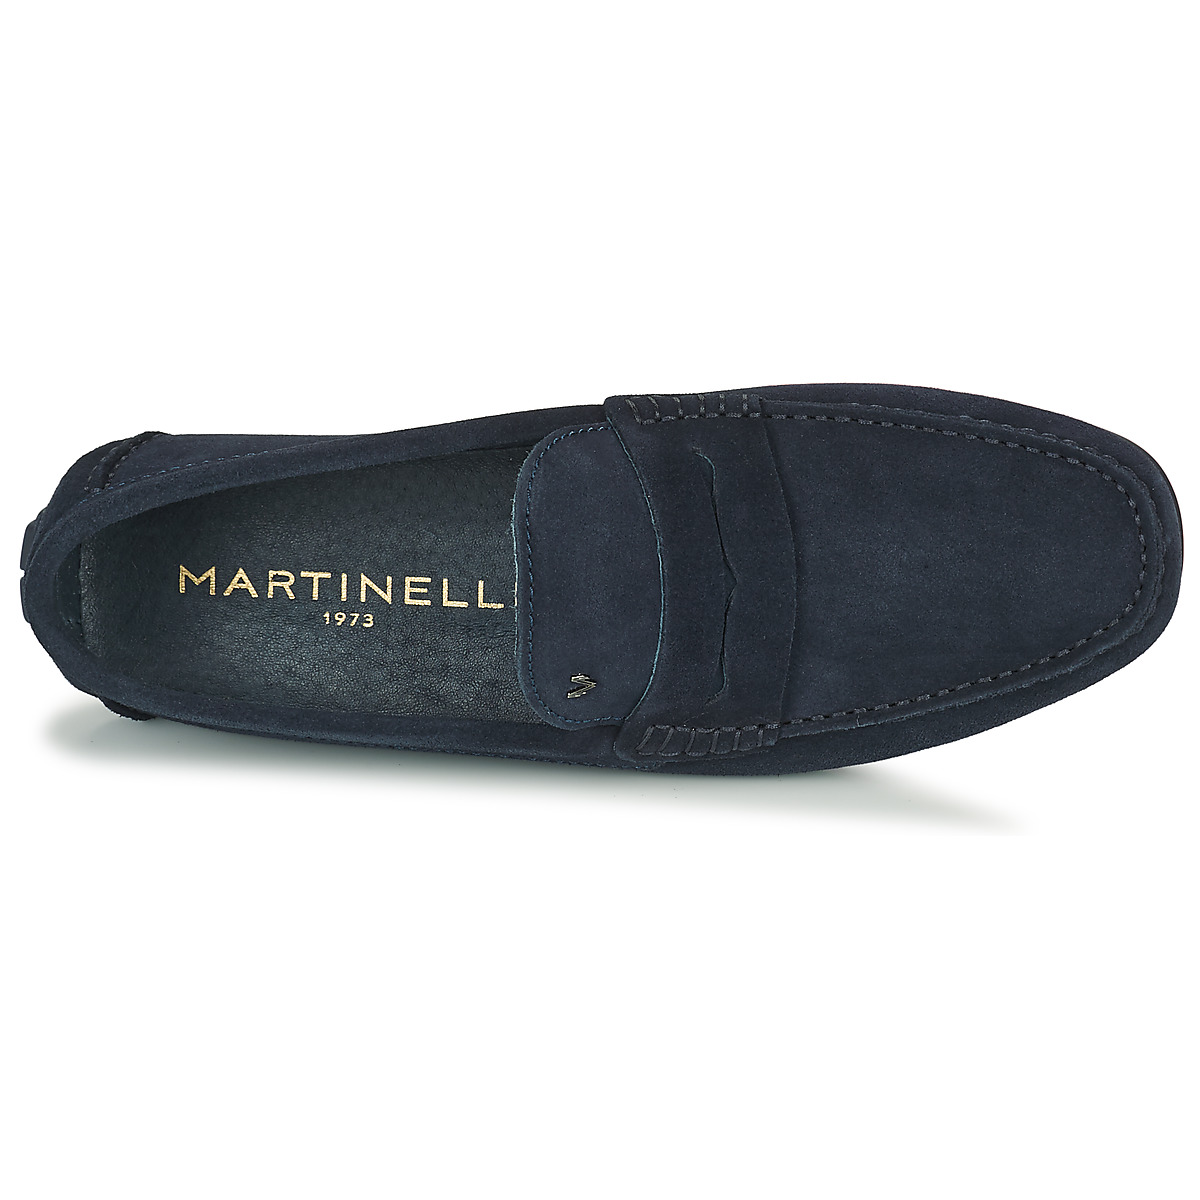 Martinelli Bleu marine PACIFIC mXty0N2R